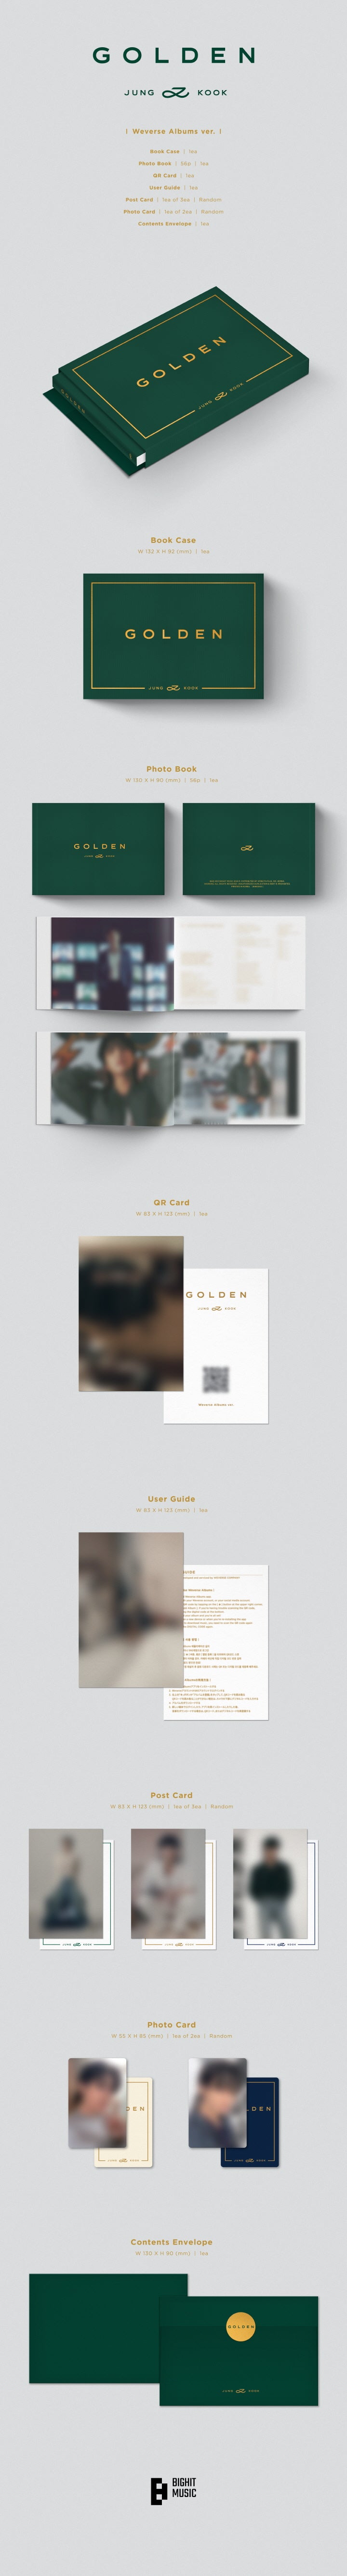 BTS Jung Kook 'GOLDEN' (Set + Weverse Albums ver.) + Weverse Gift